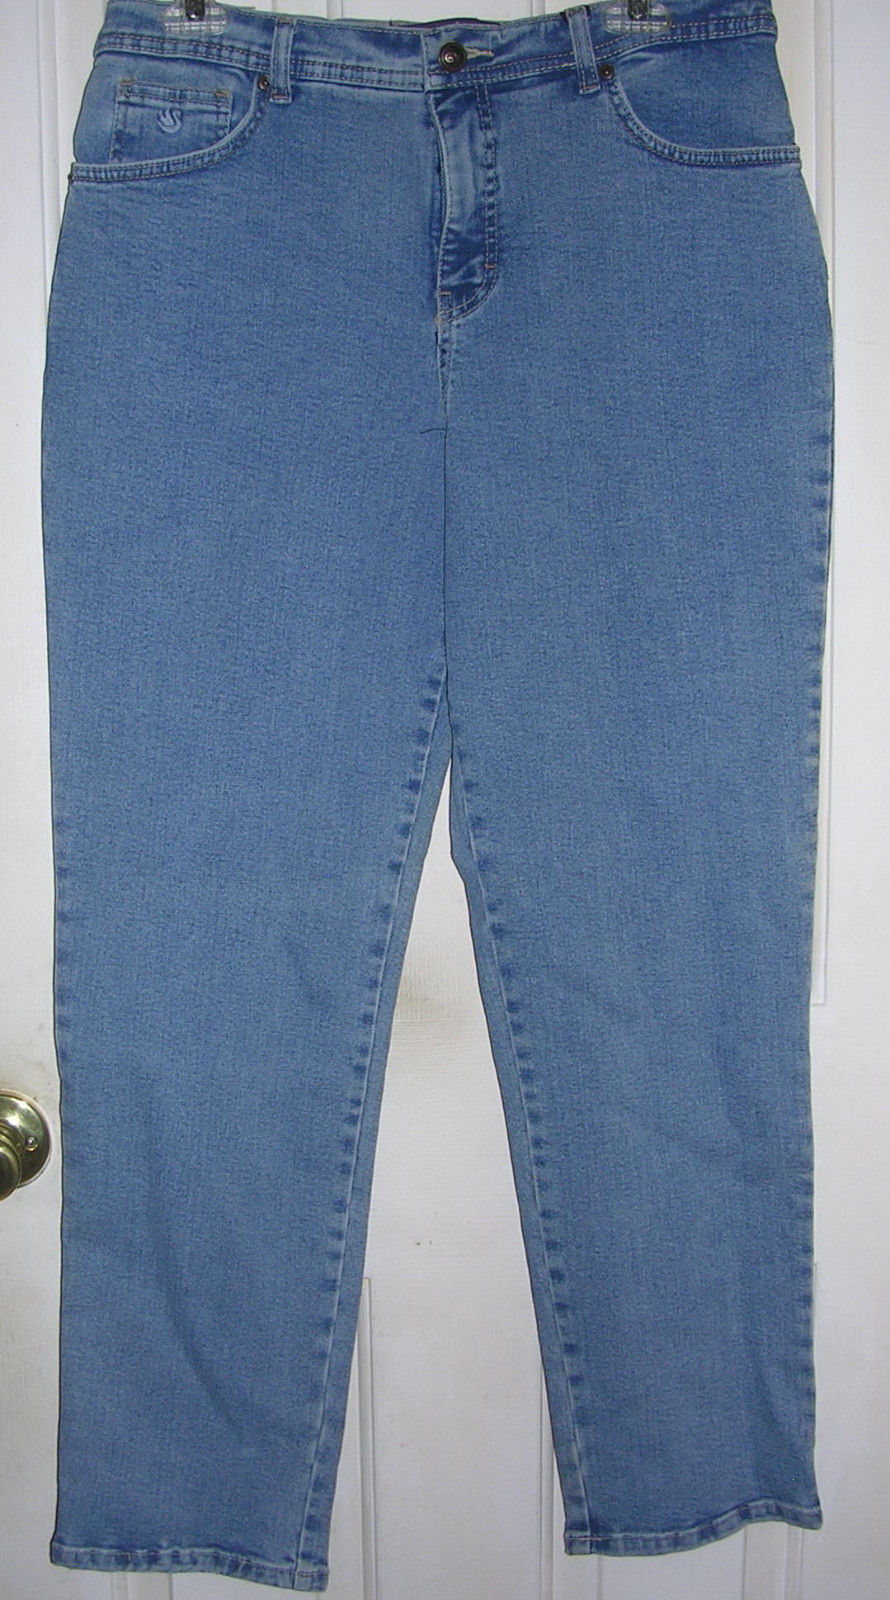 gloria vanderbilt jeans amanda 2.0